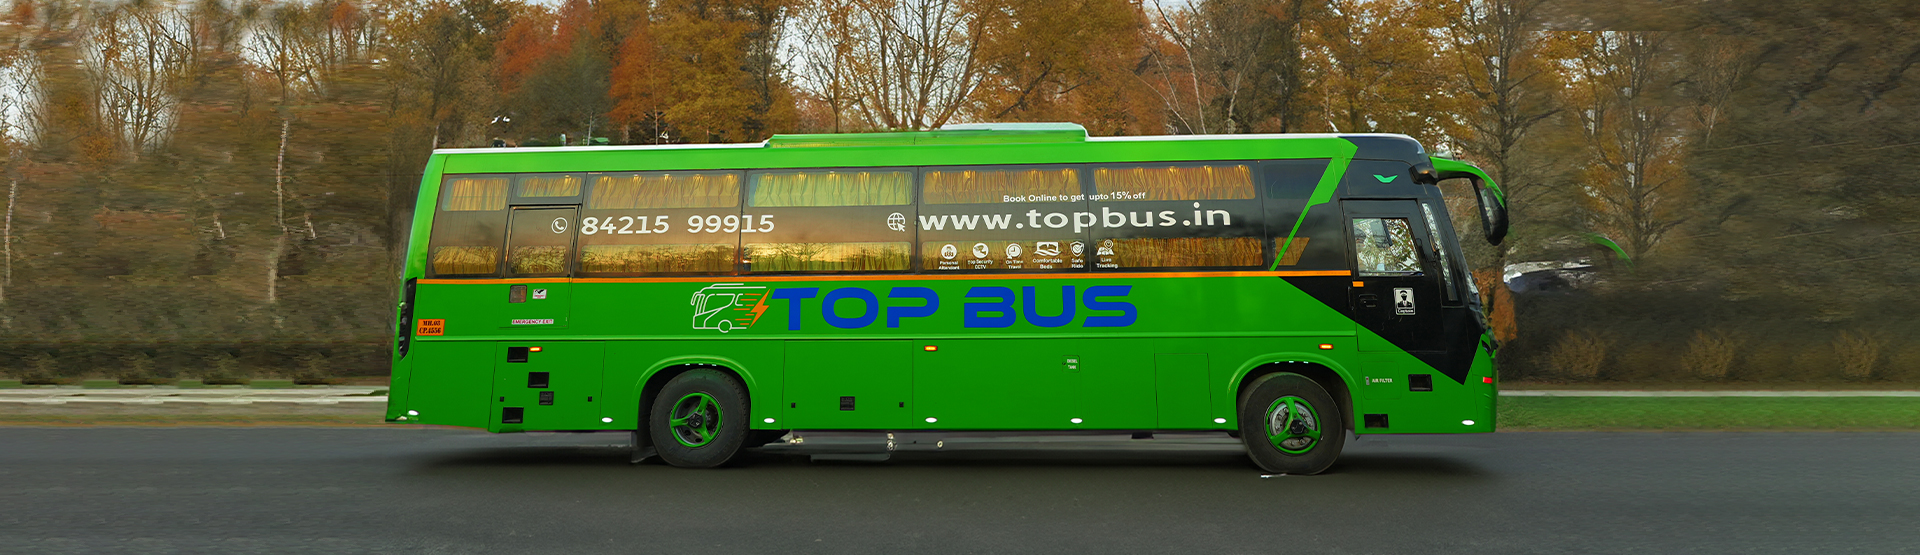 Online Bus Ticket Booking Top Bus Travels